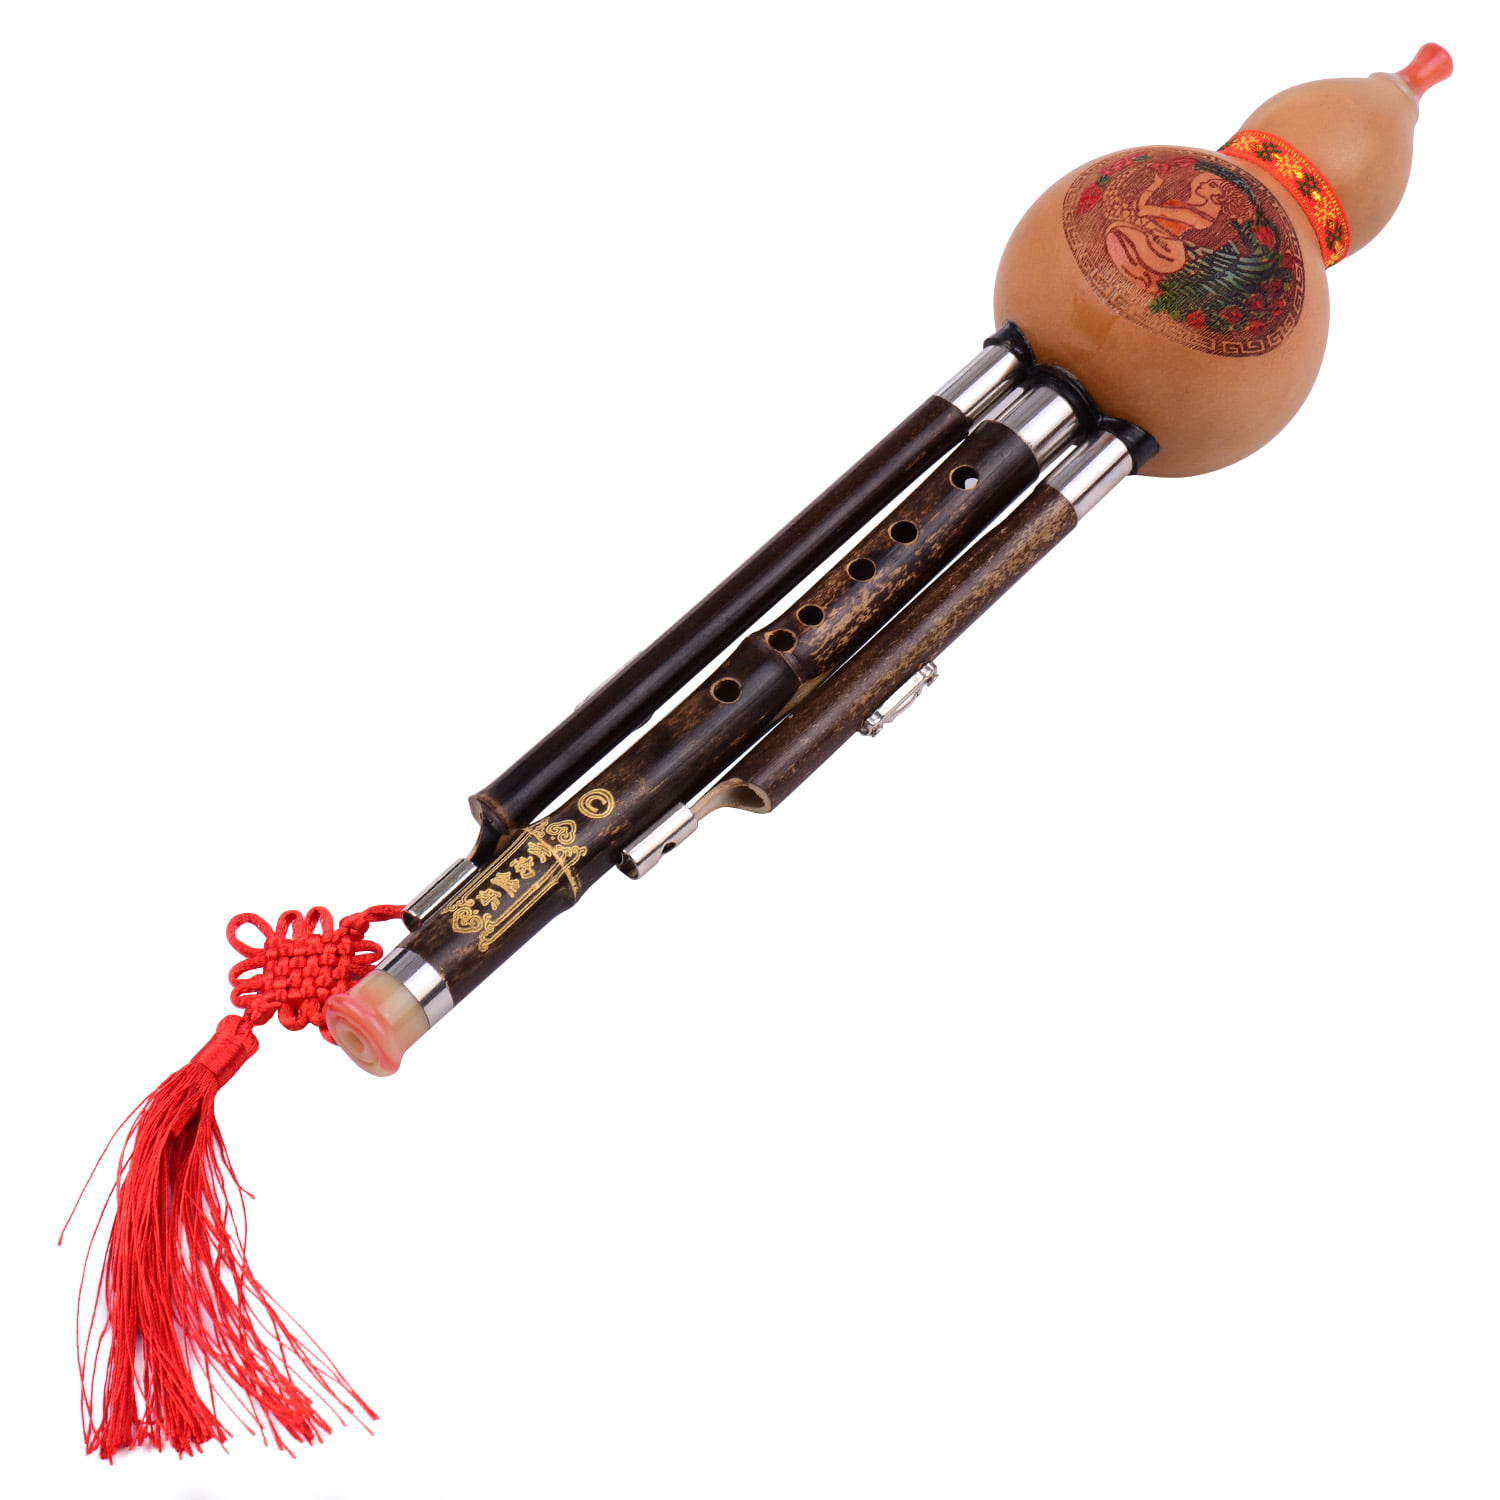 C/b-flat Key Cucurbit Flute Hulusi Chinese Traditional Musical Instrument Wind-instrument Key C